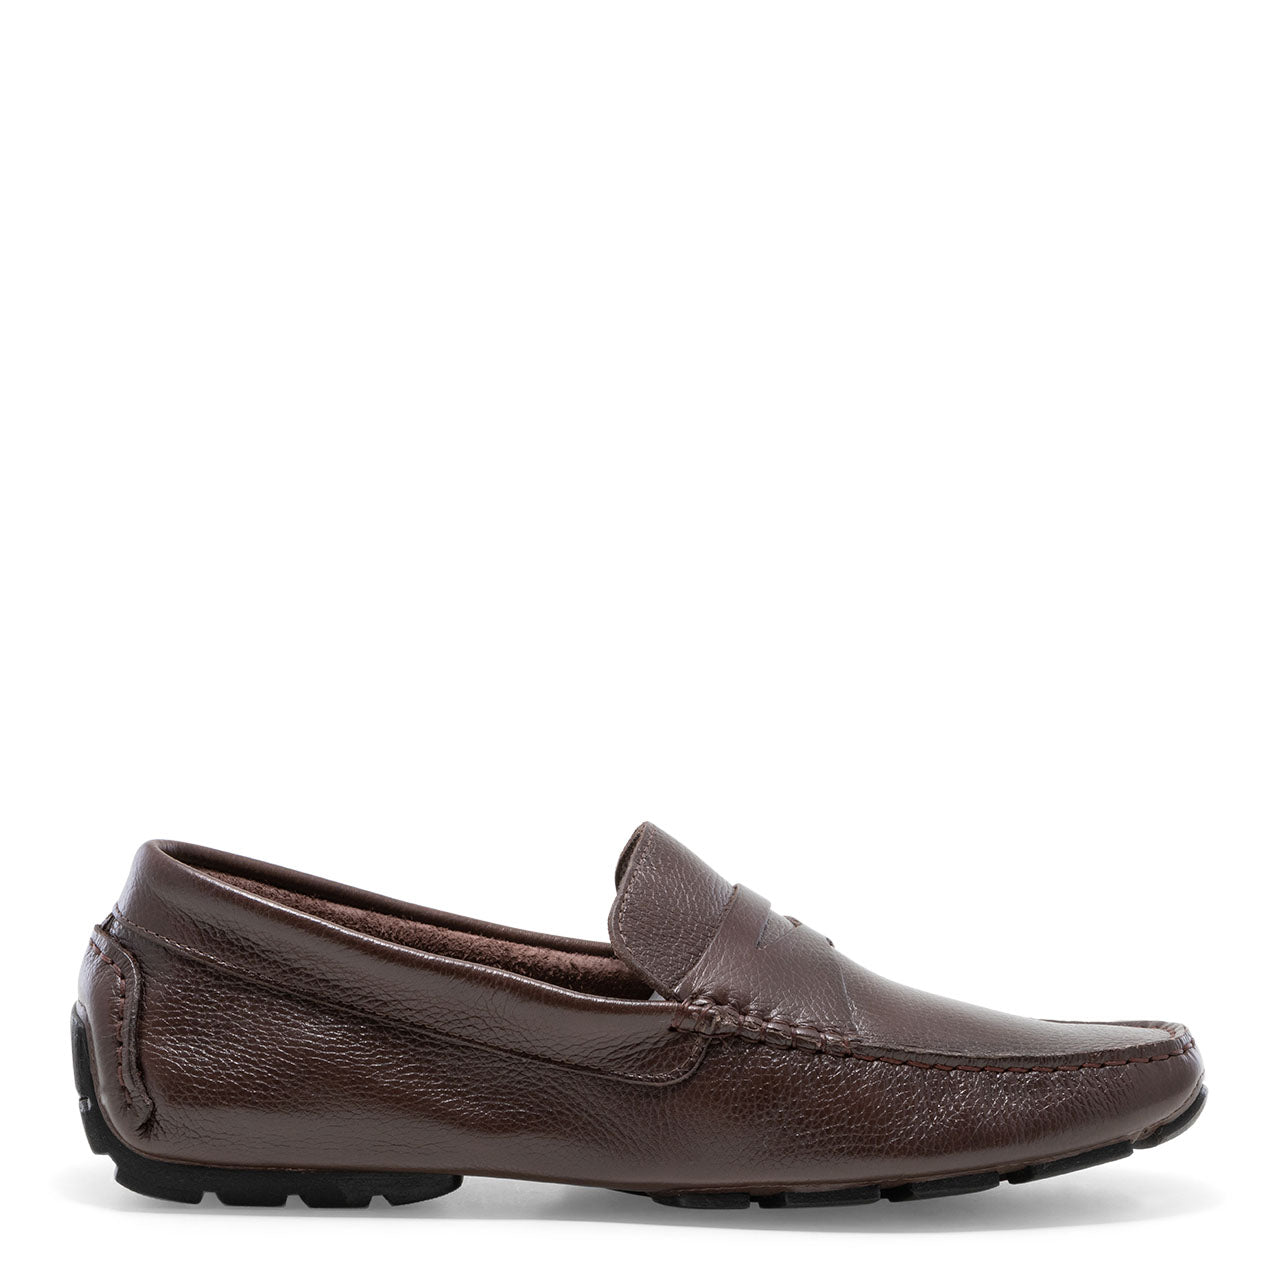 Daytona - Brown Dress Loafers for Men by J75 4